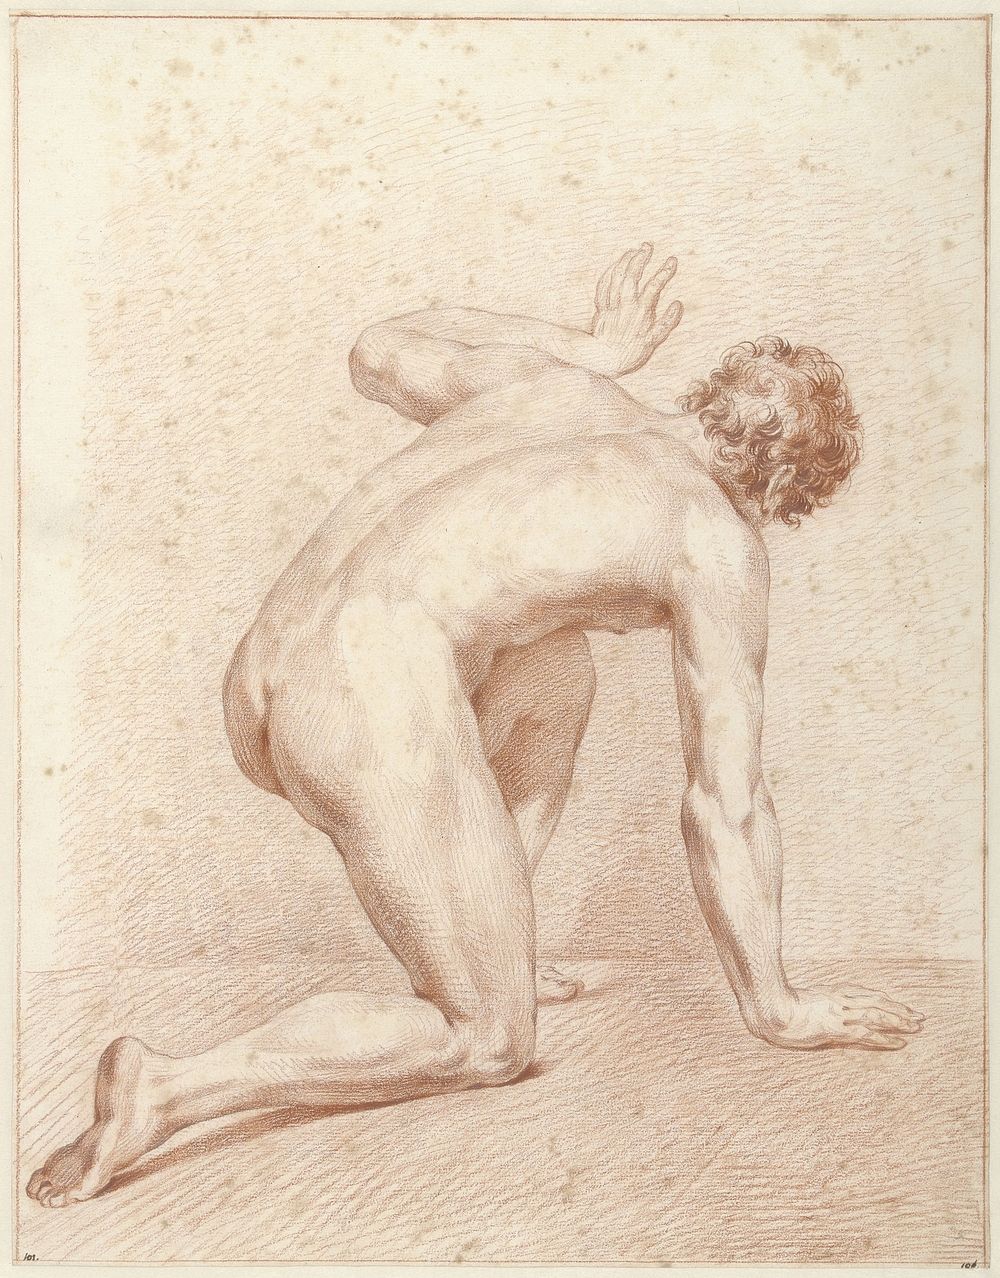 Mannelijk naakt, knielend, op de rug gezien (1795) by Jacob Willemz de Vos